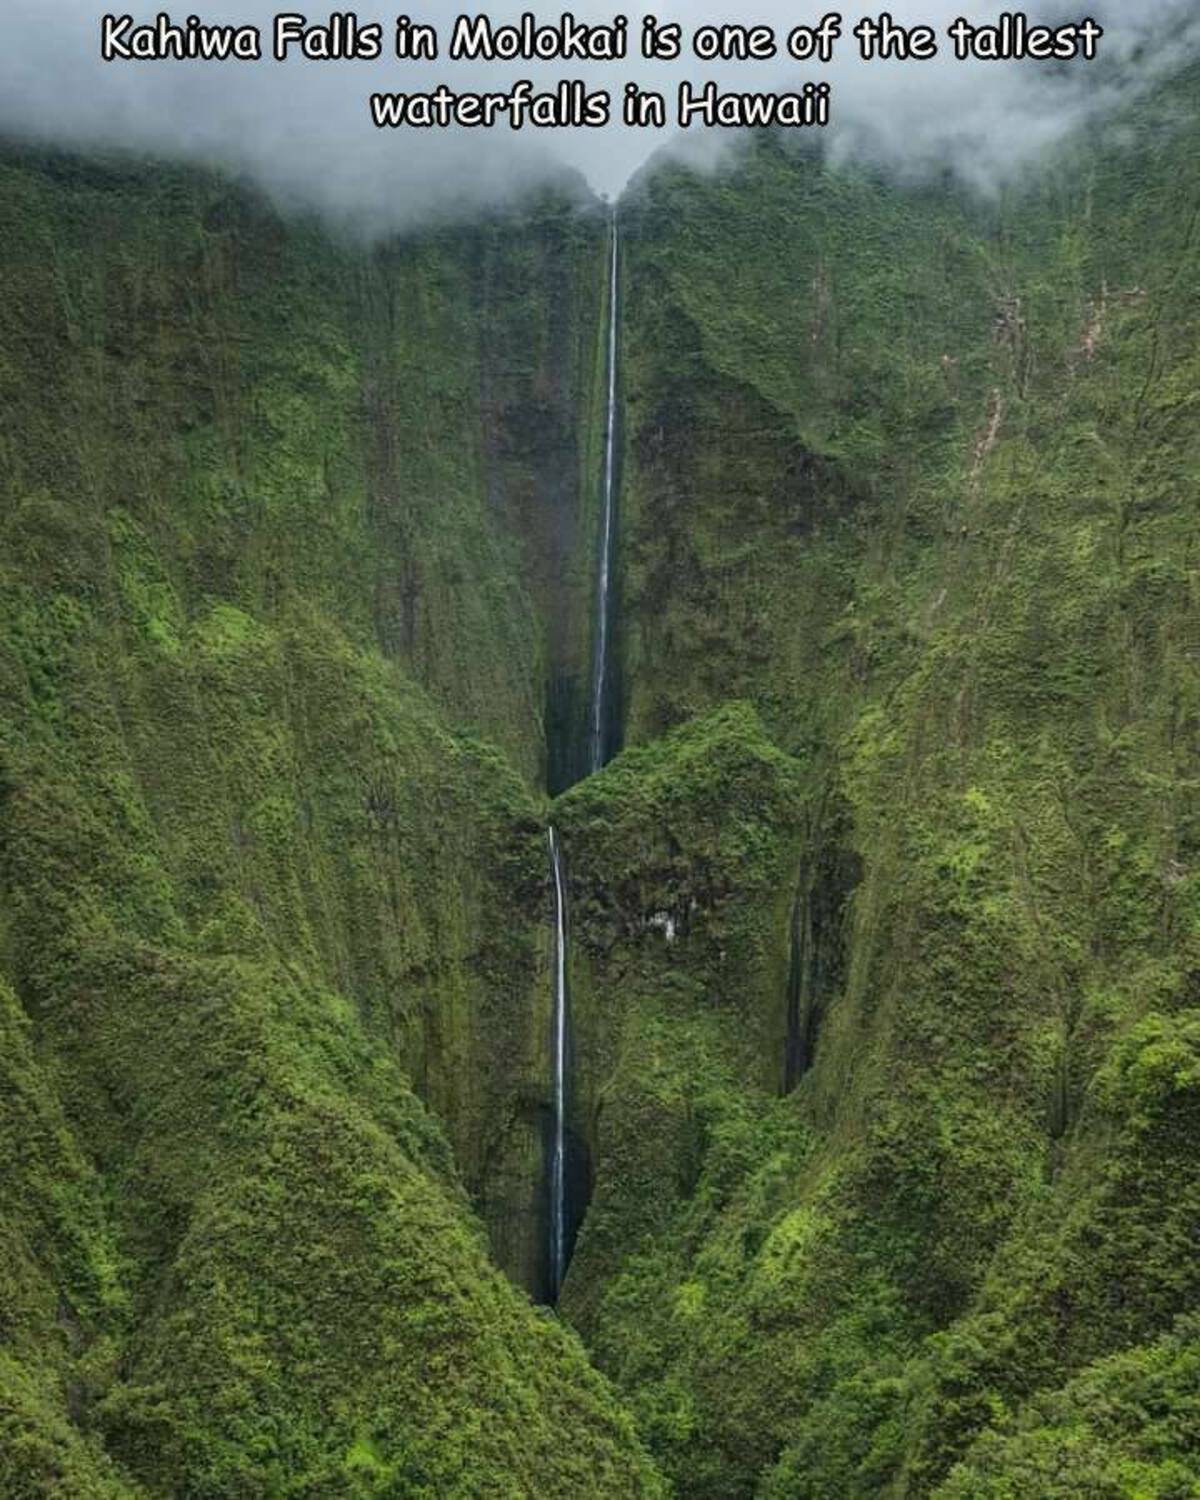 kahiwa falls - Kahiwa Falls in Molokai is one of the tallest waterfalls in Hawaii